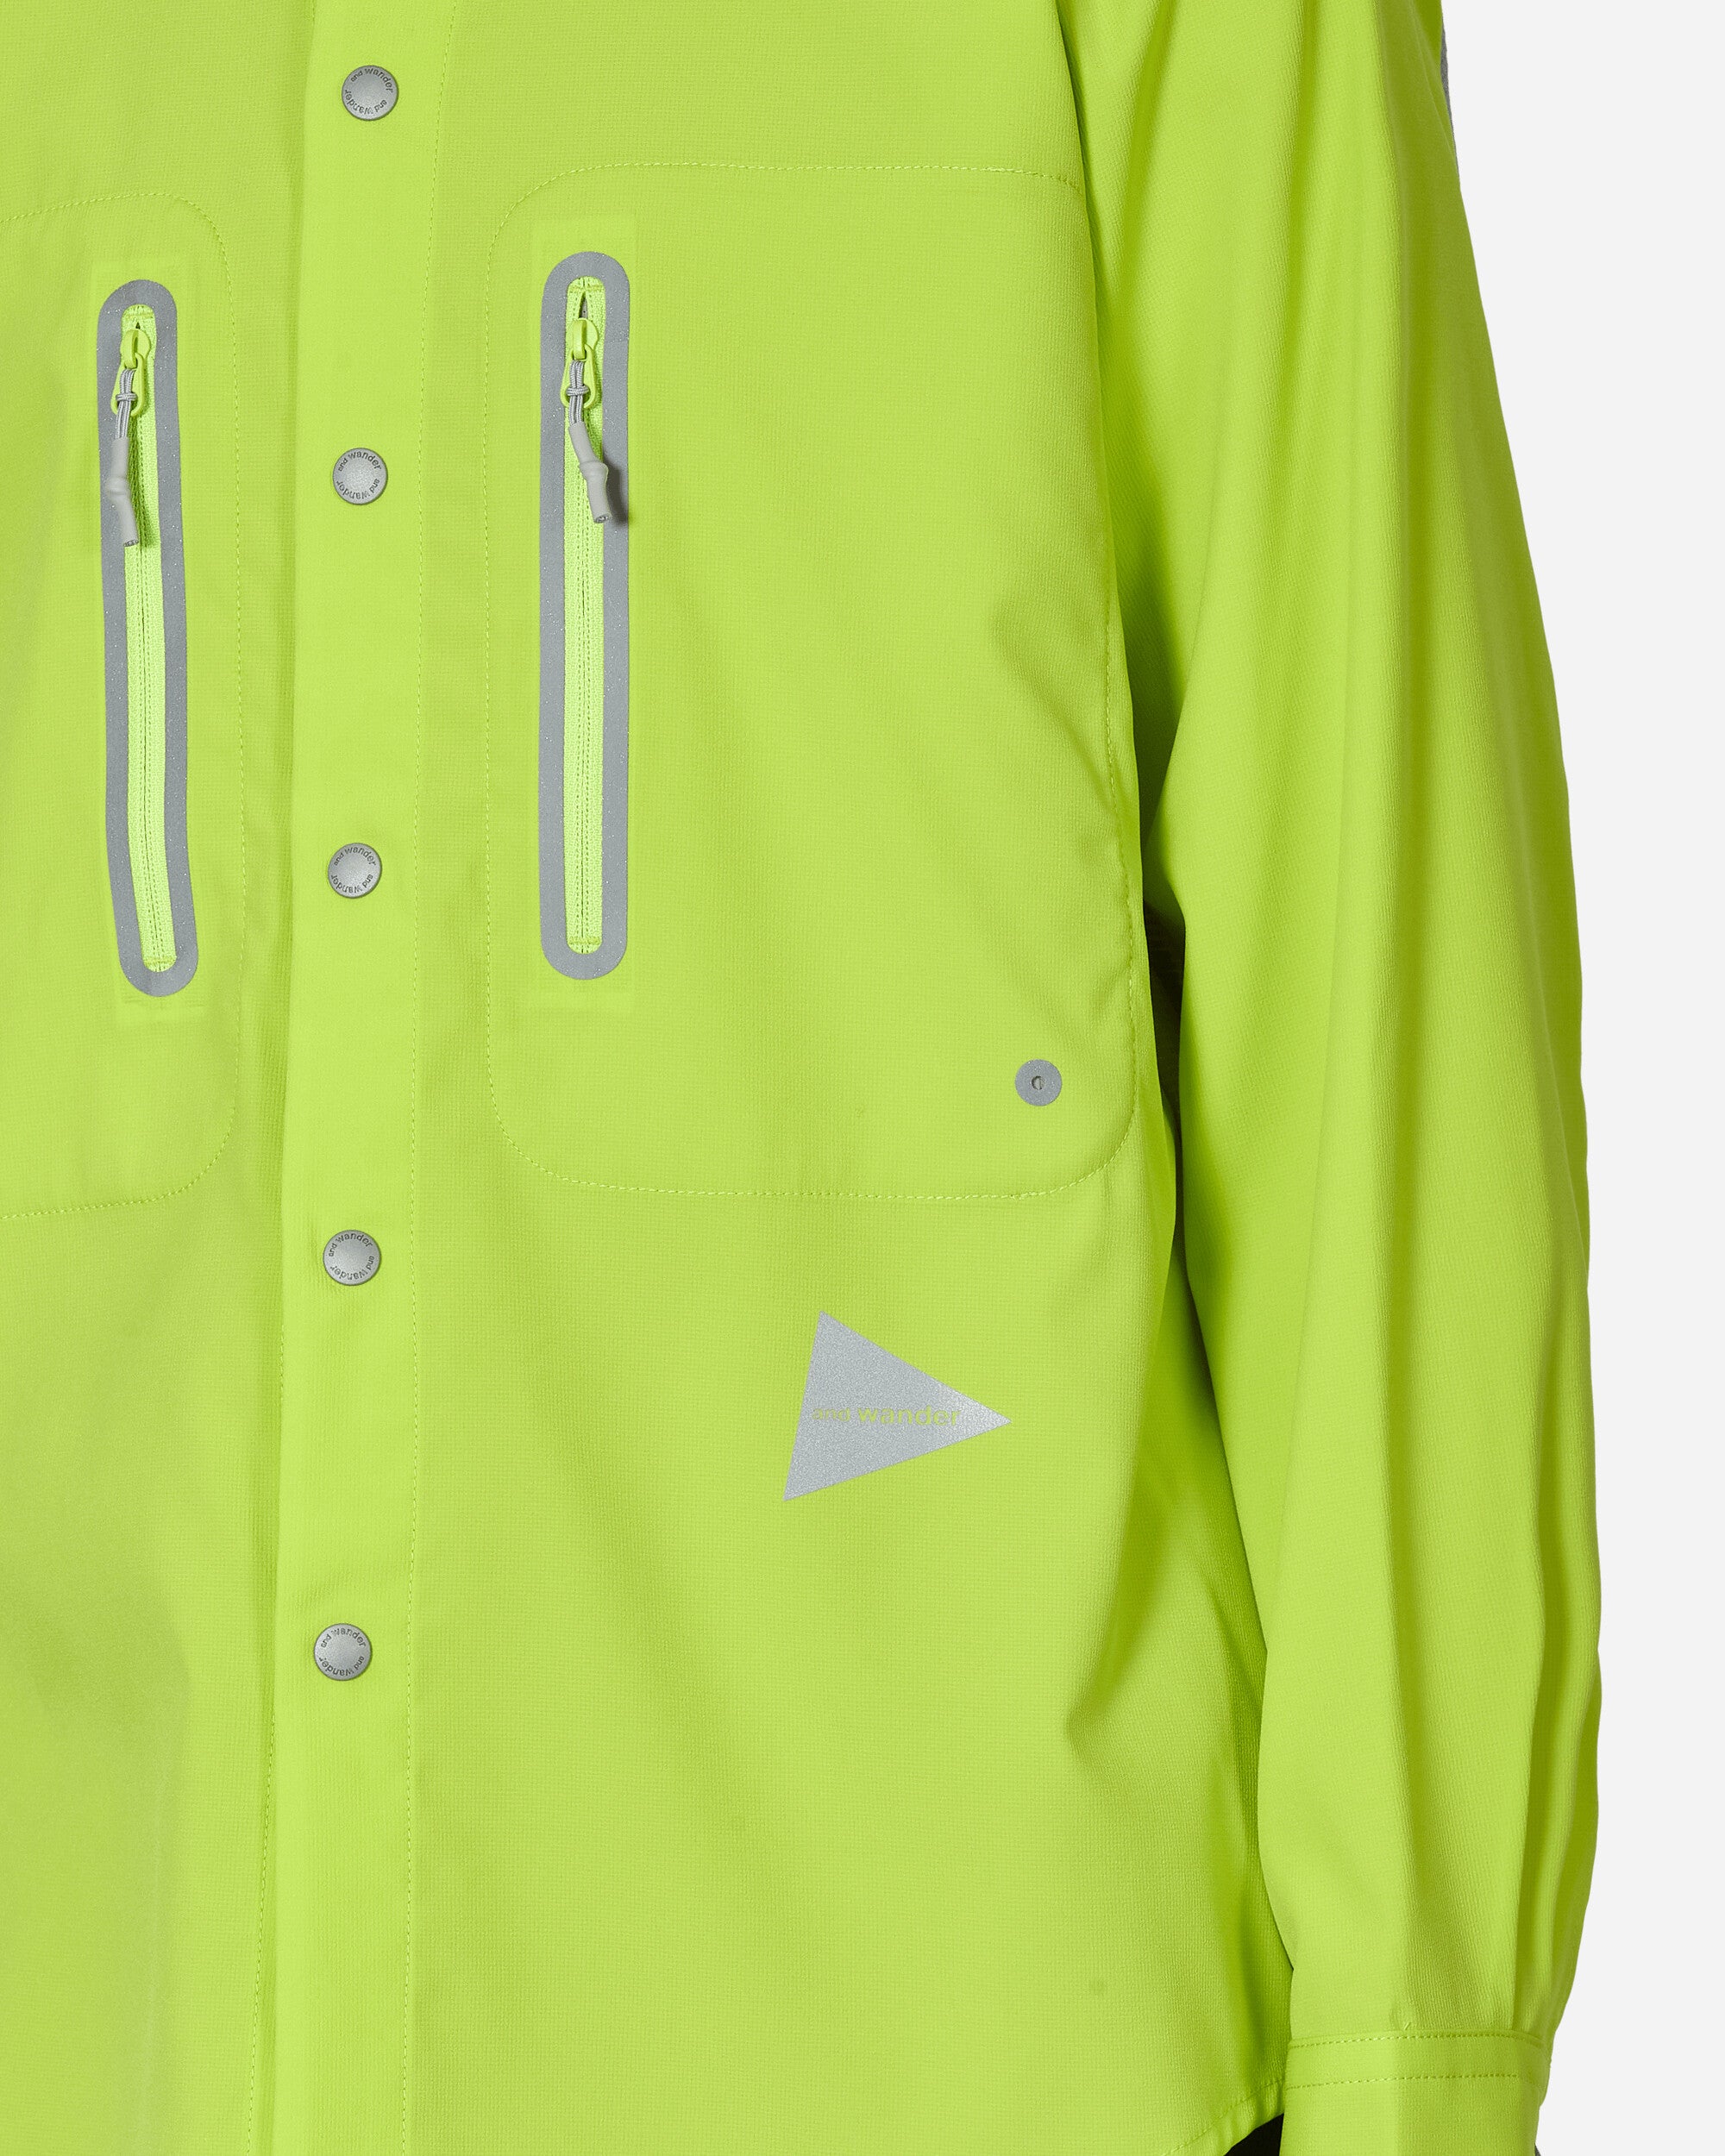 and wander Tech Ls Shirt Yellow Green Shirts Longsleeve Shirt 5744153126 200